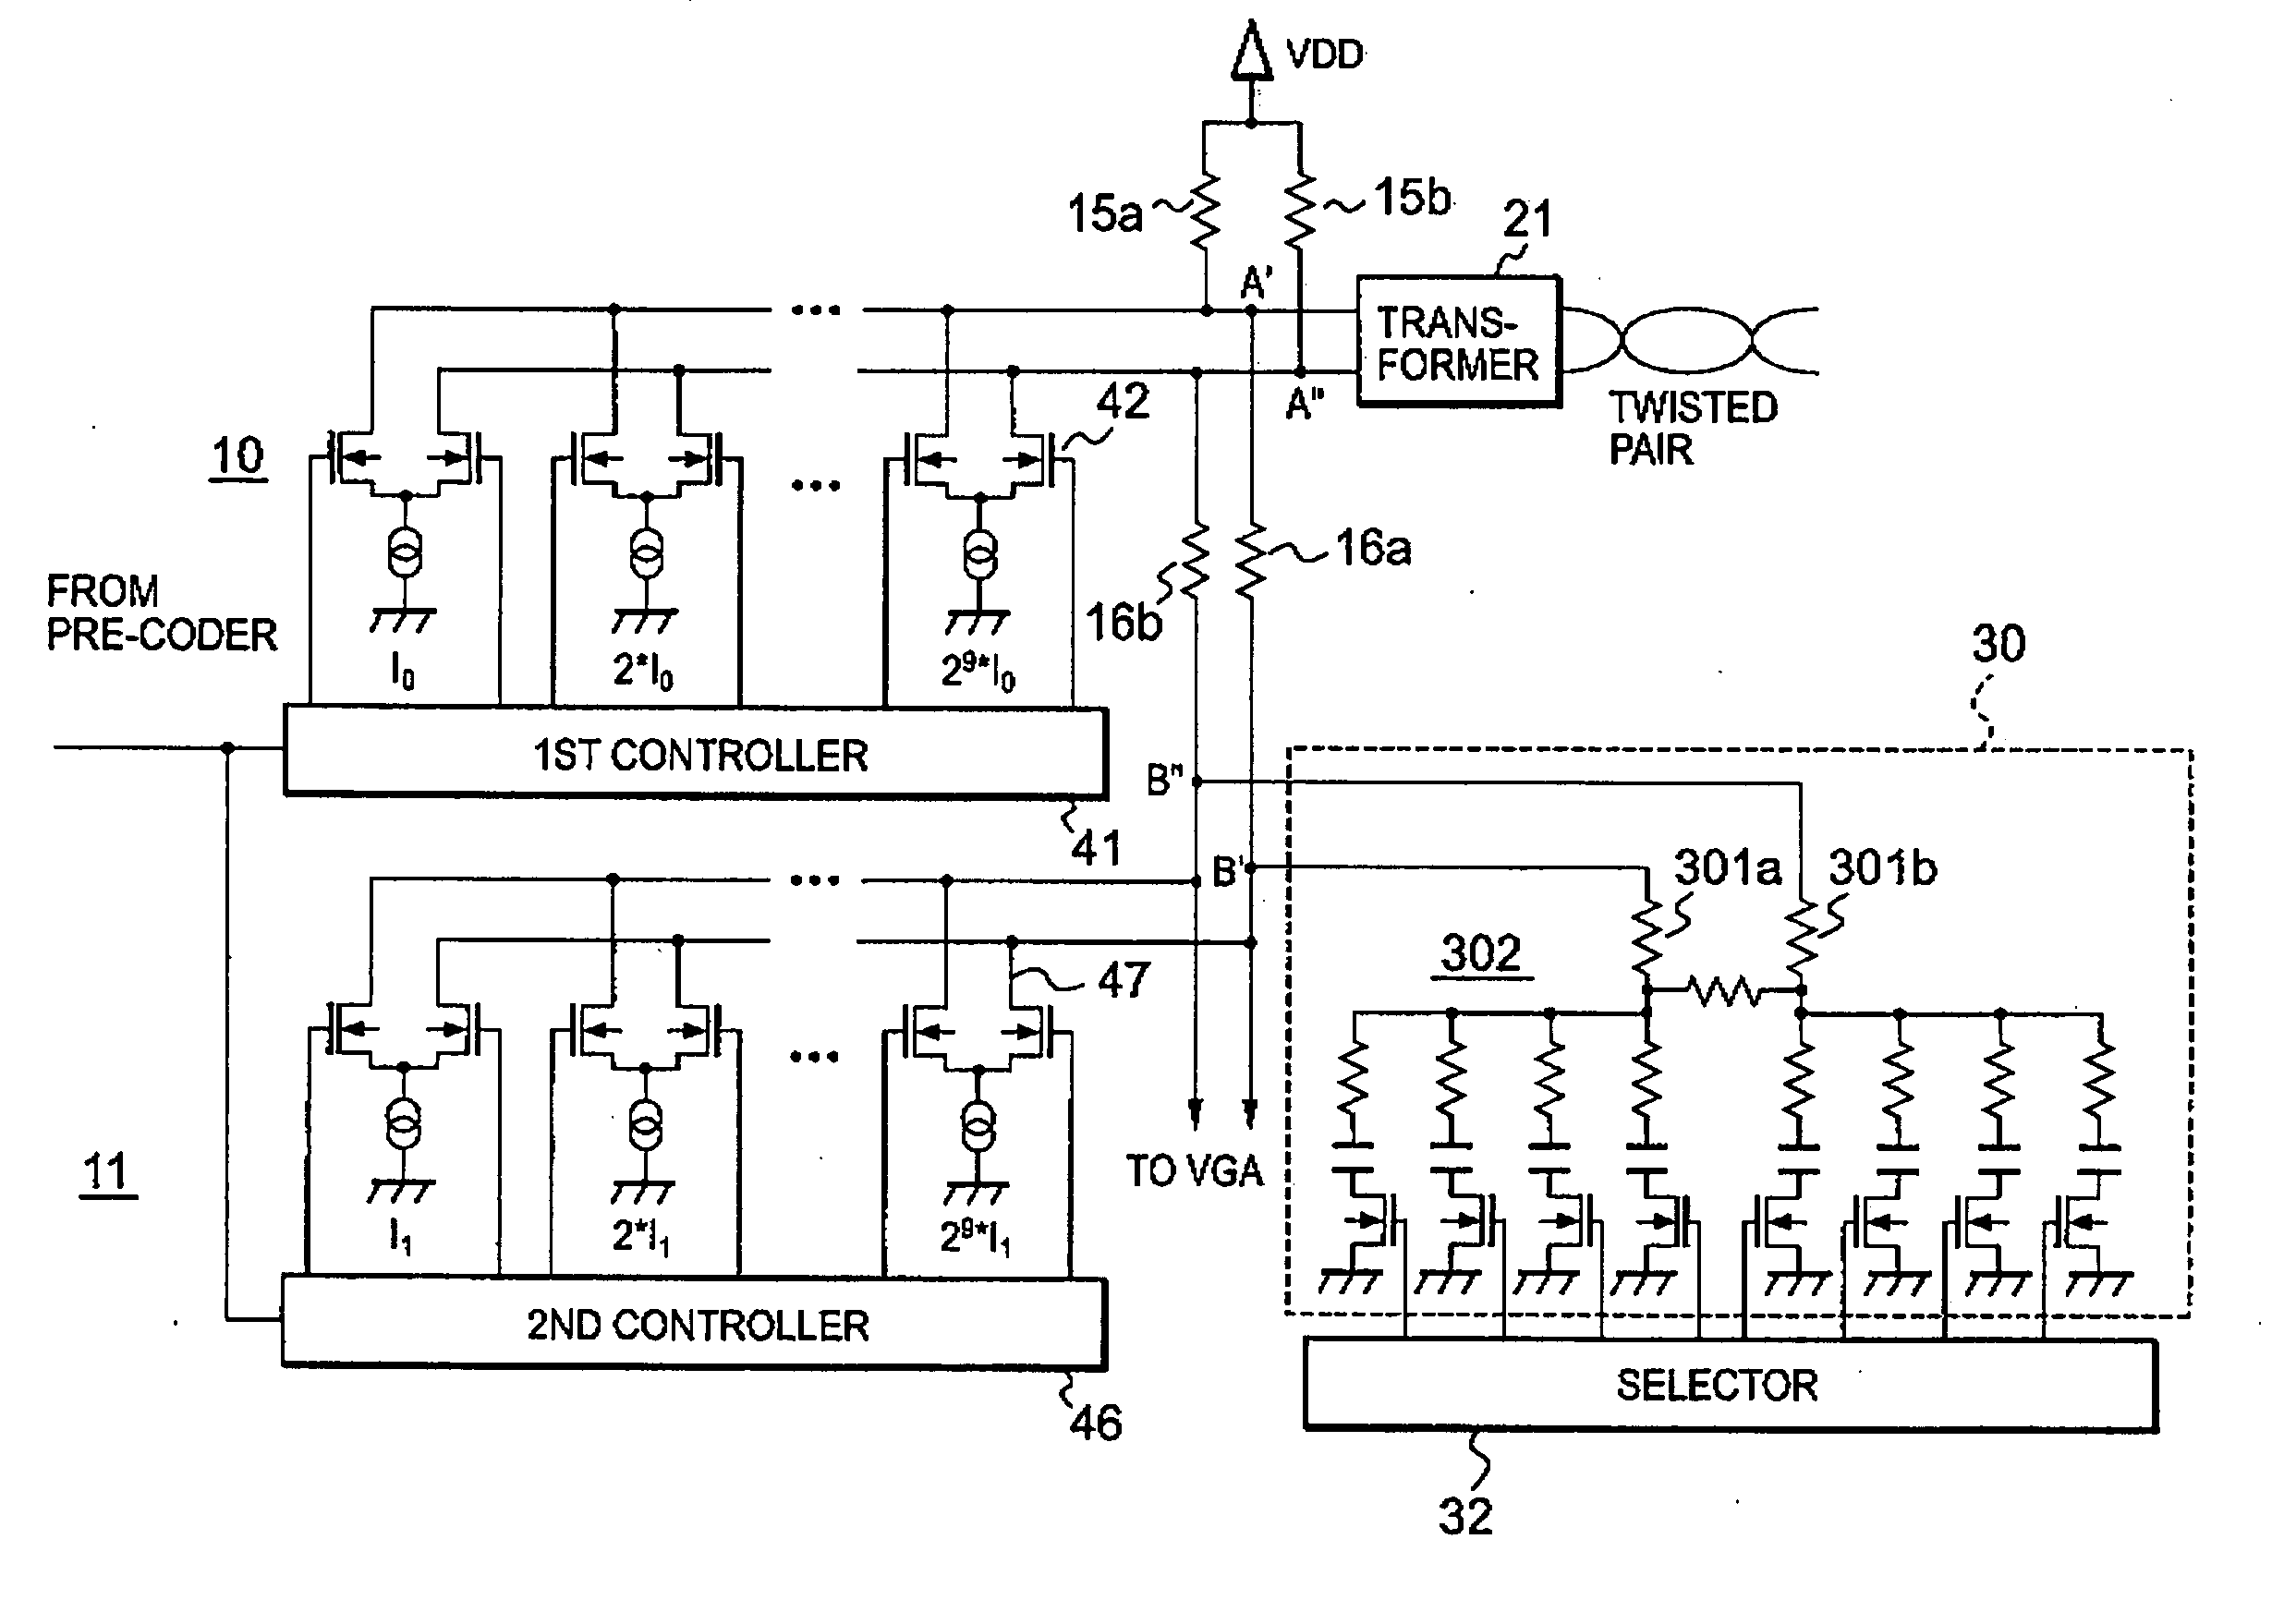 Active hybrid transformer circuit having a replica driver